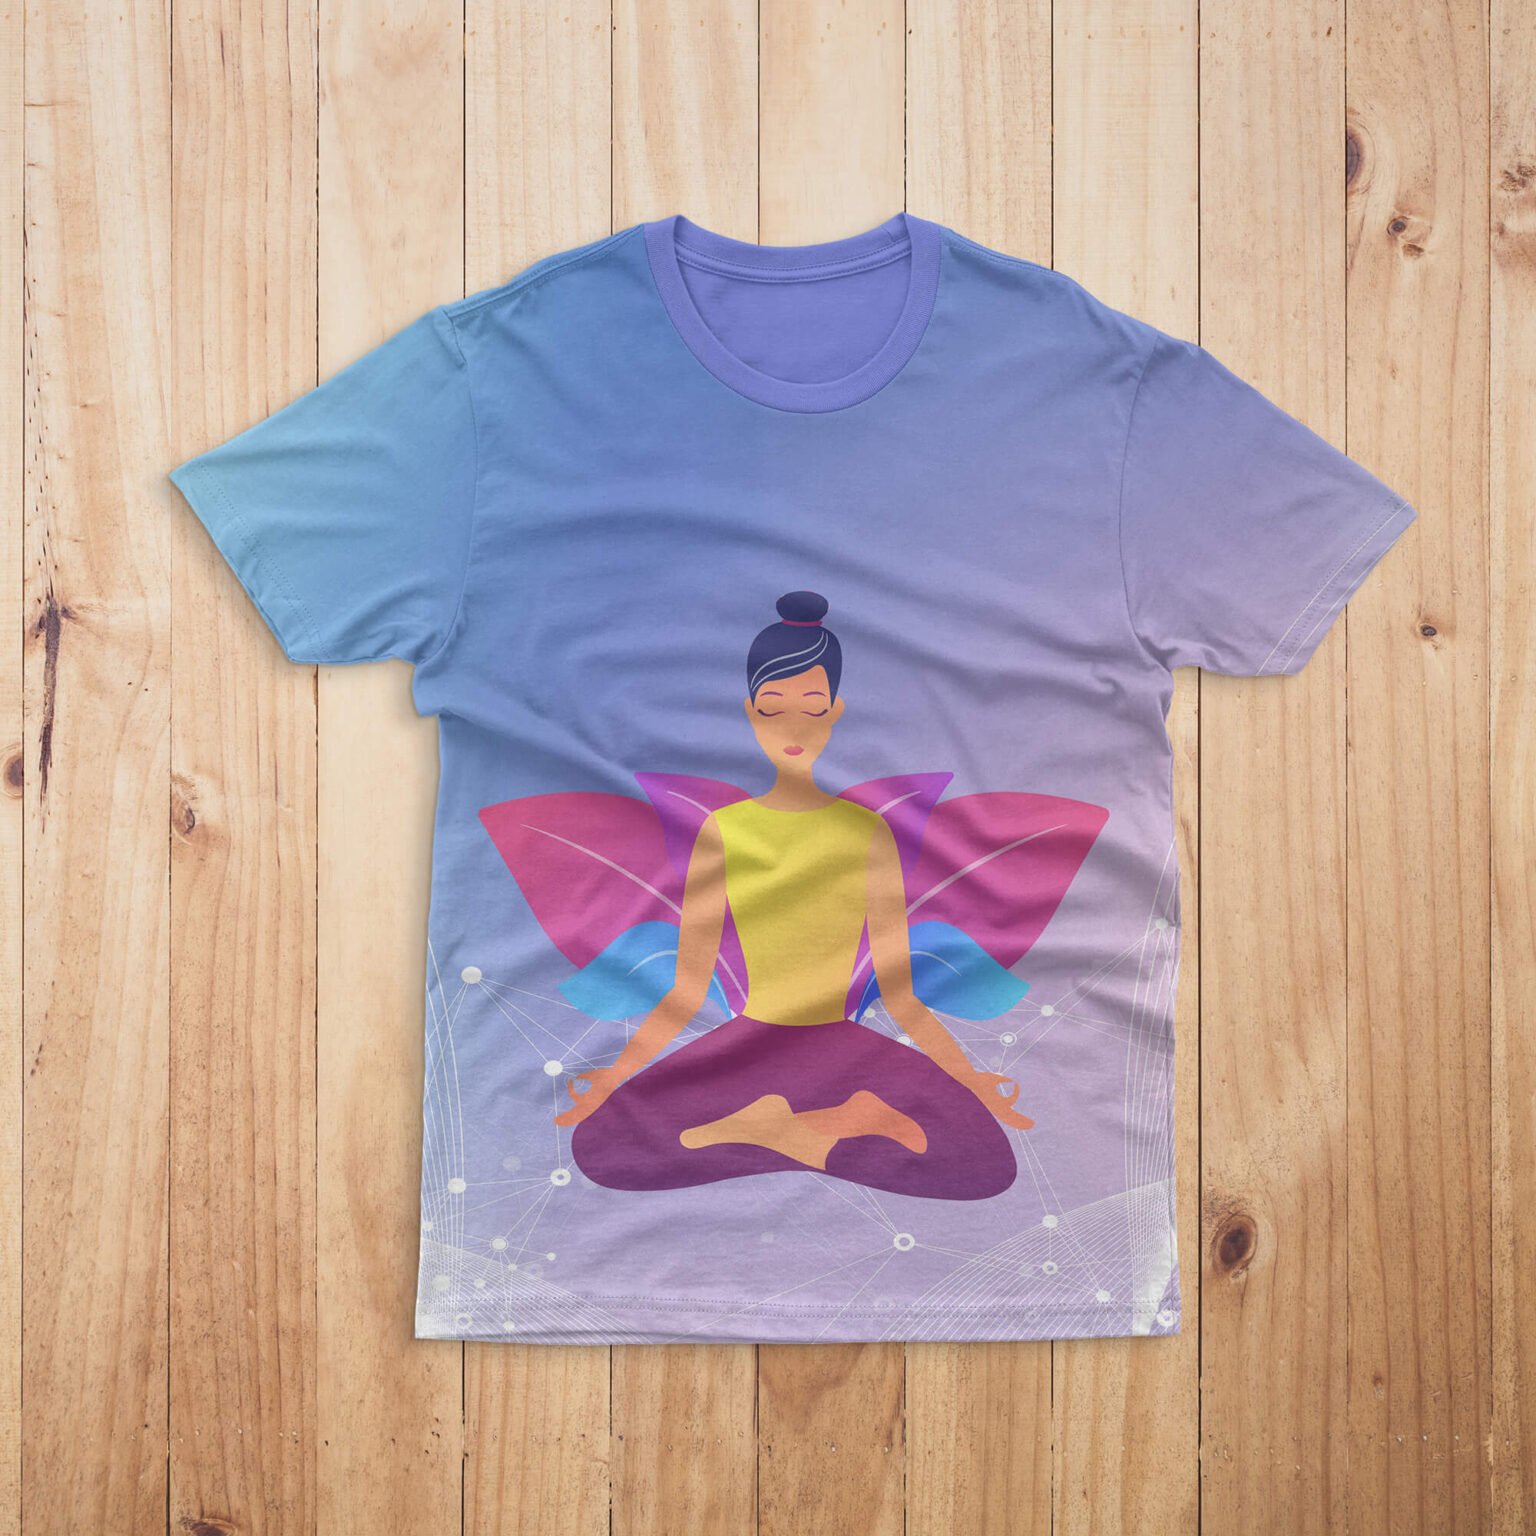 Download Free Yoga T Shirt Mockup PSD Template - Mockup Den